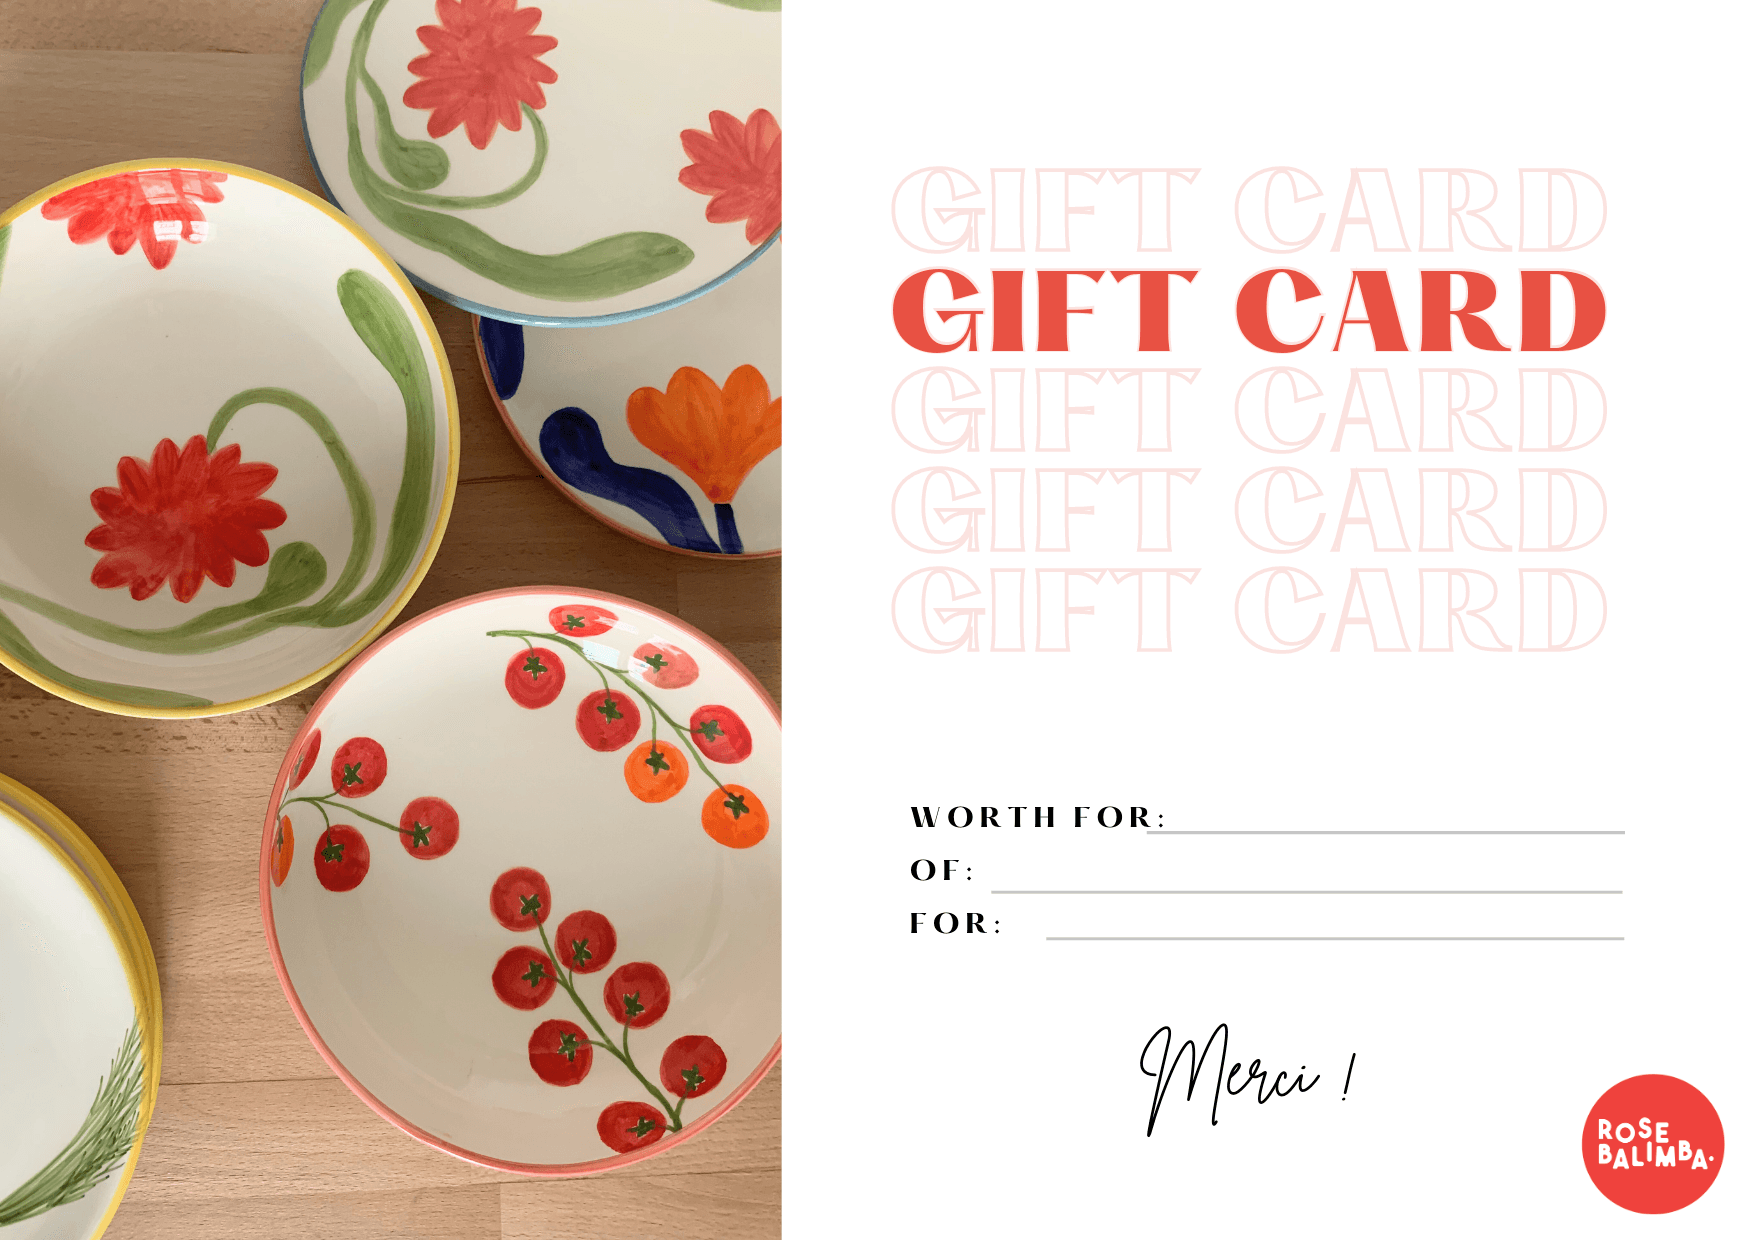 🎁 Colourful ceramic gift card ! 🎁 - ROSE BALIMBA